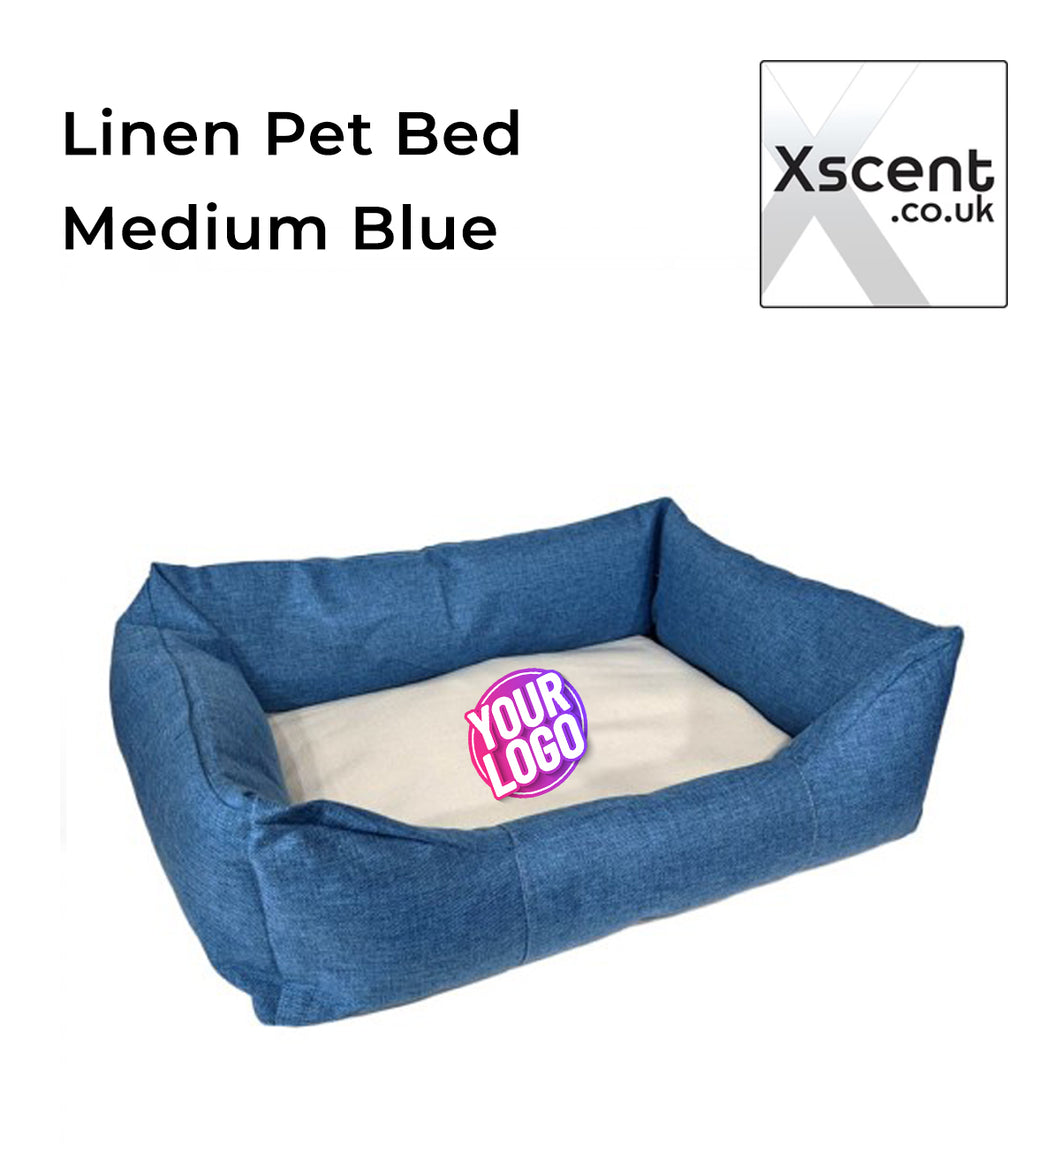 Linen Pet Bed - Add Your Logo!